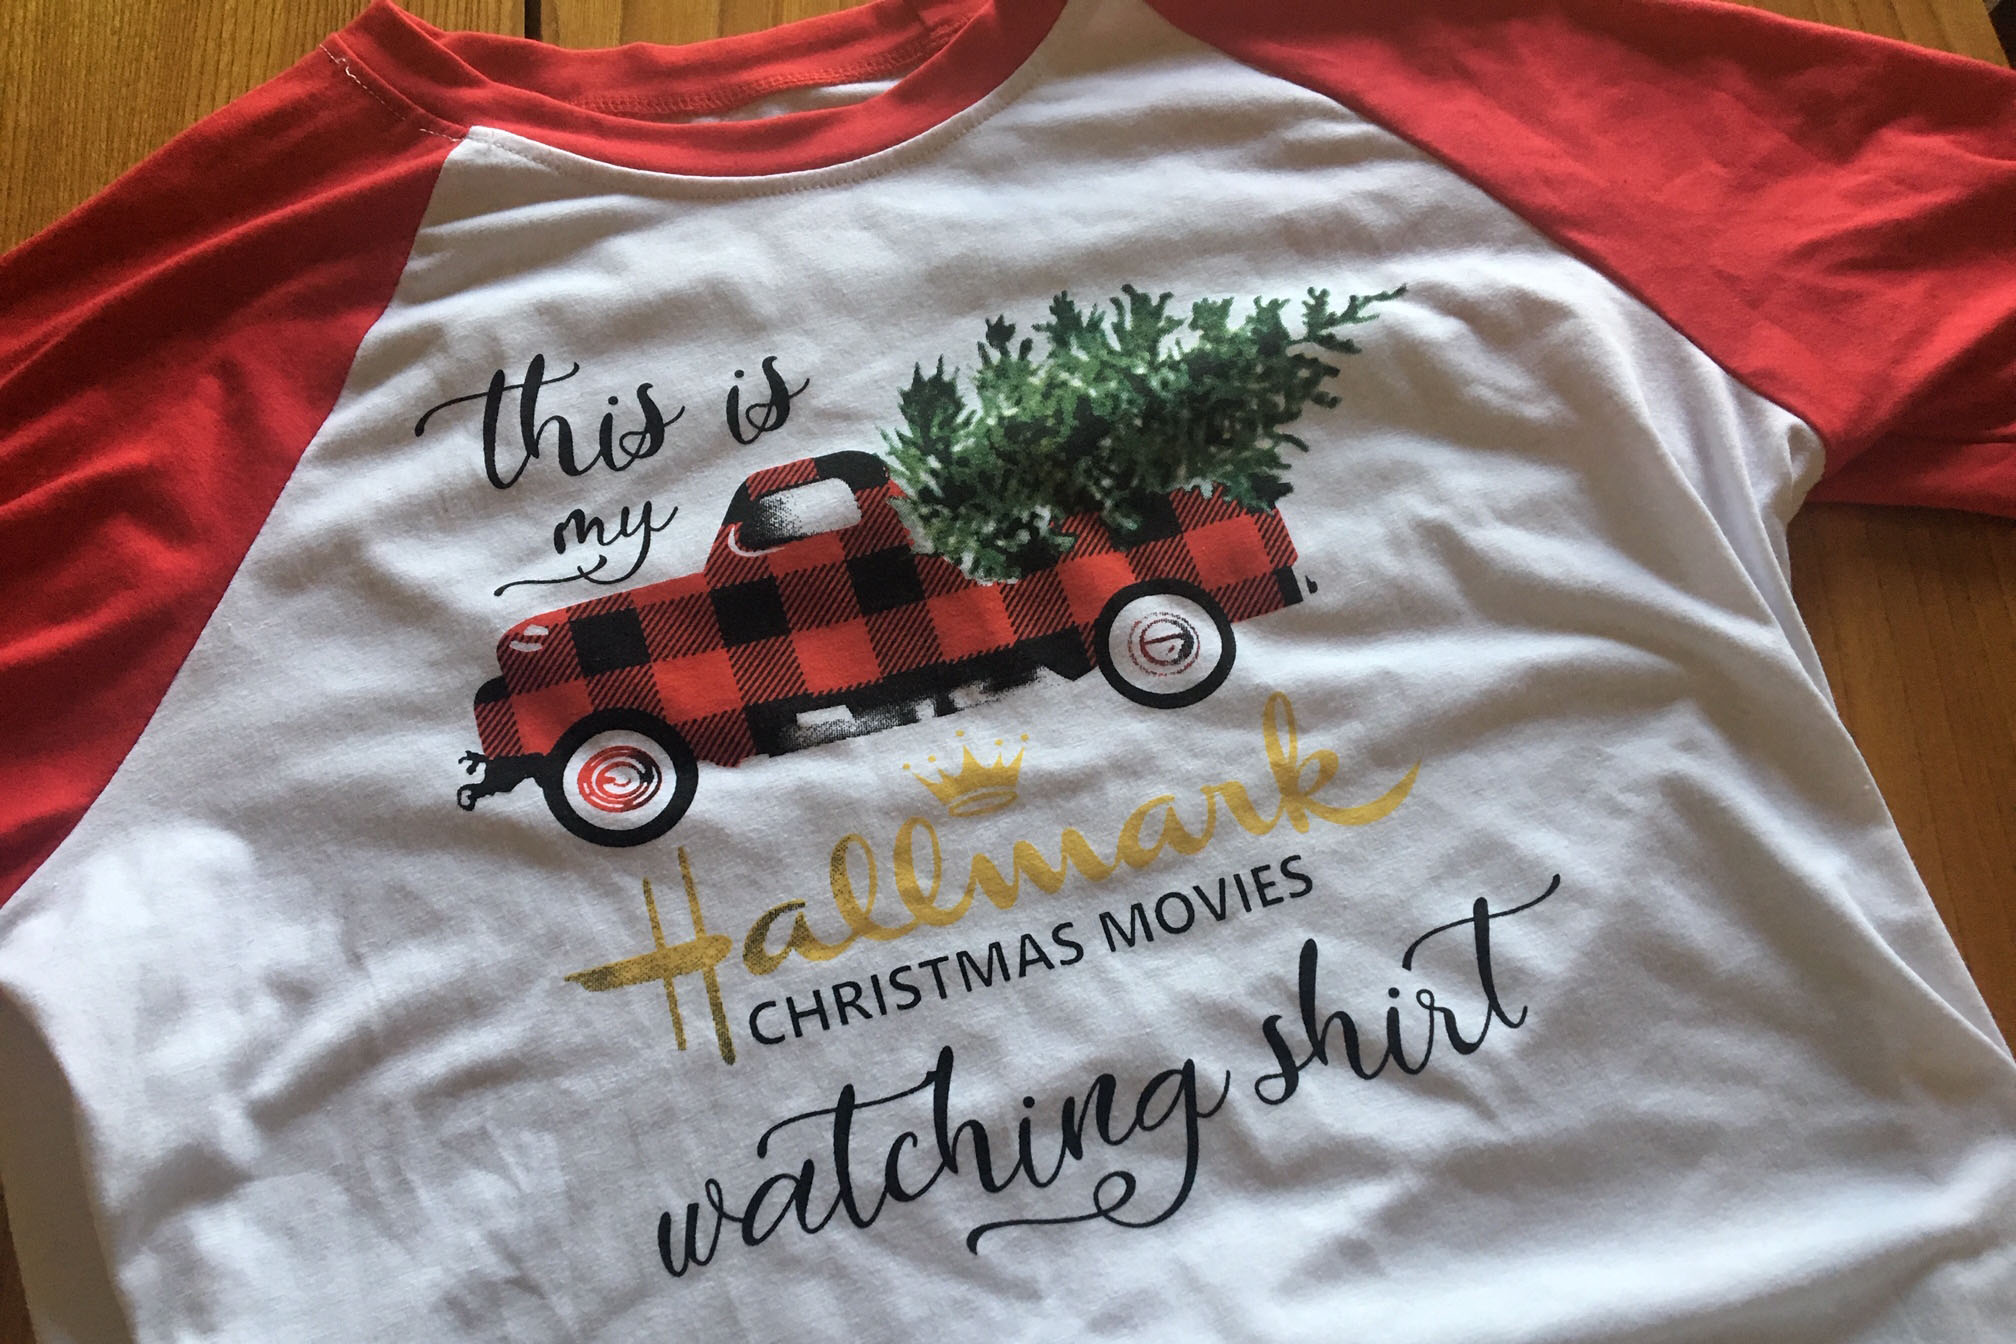 Christmas movies watching shirt